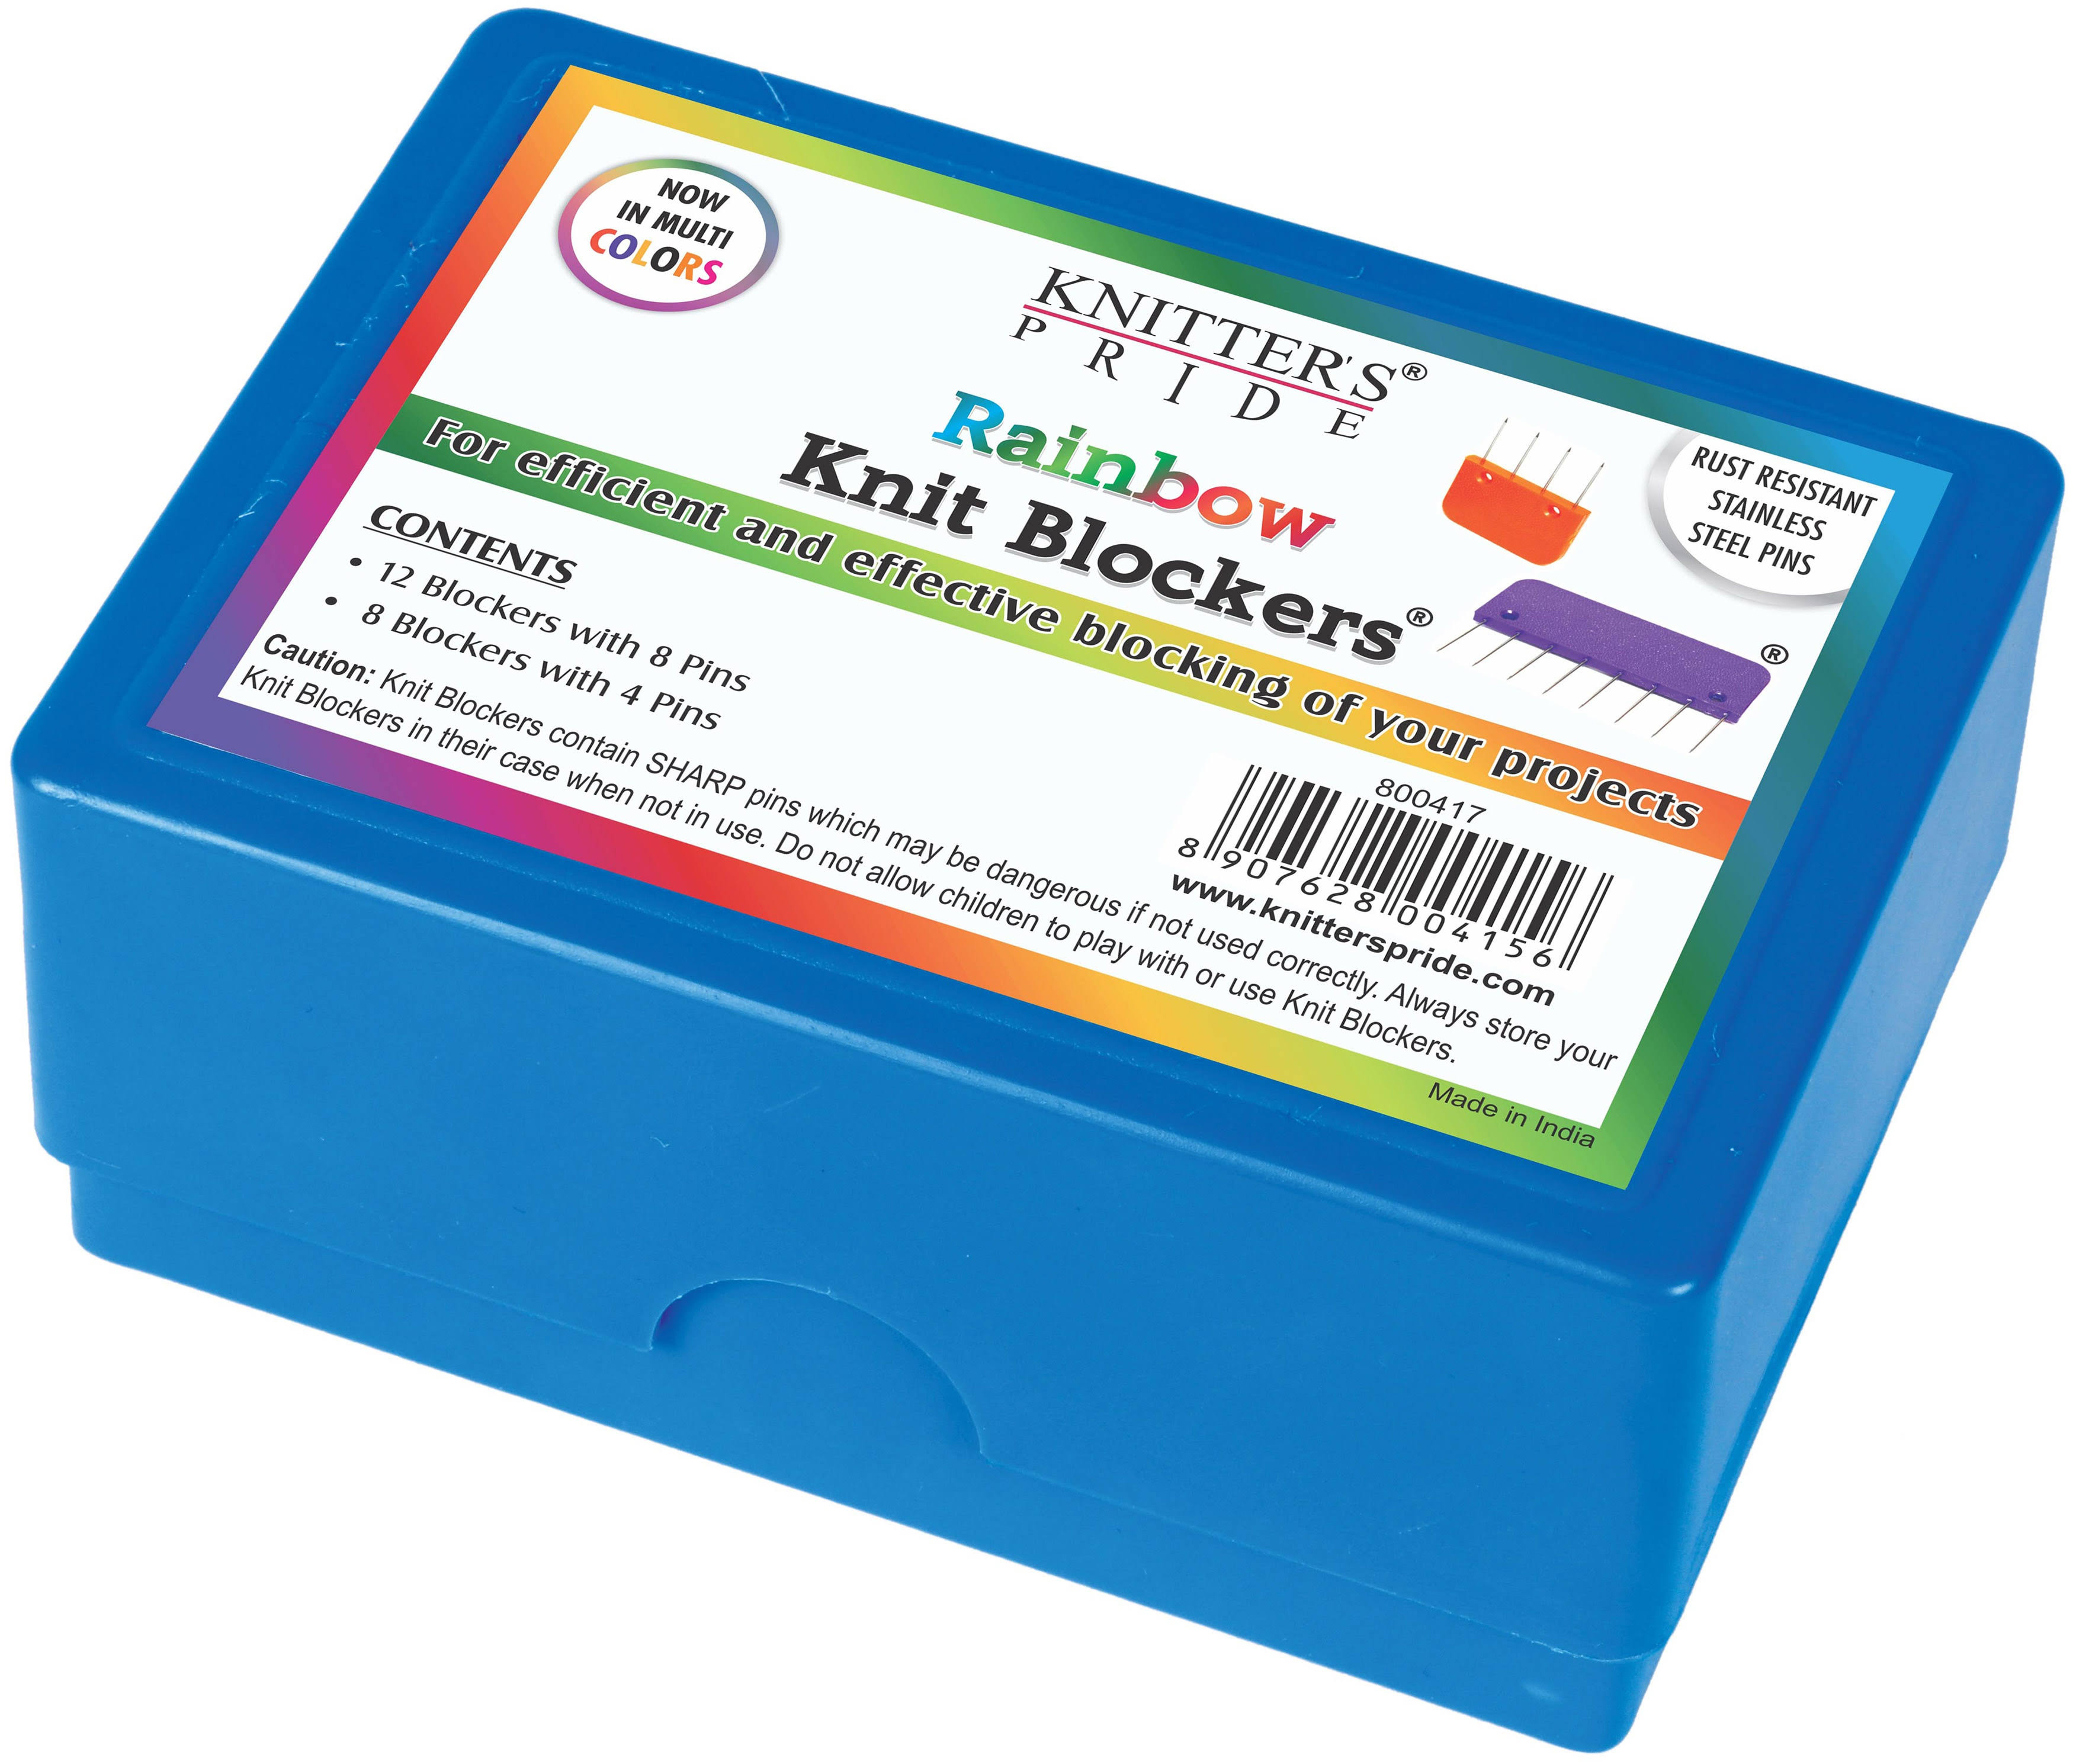 Knitter's Pride Rainbow Knit Blockers Package of 20*